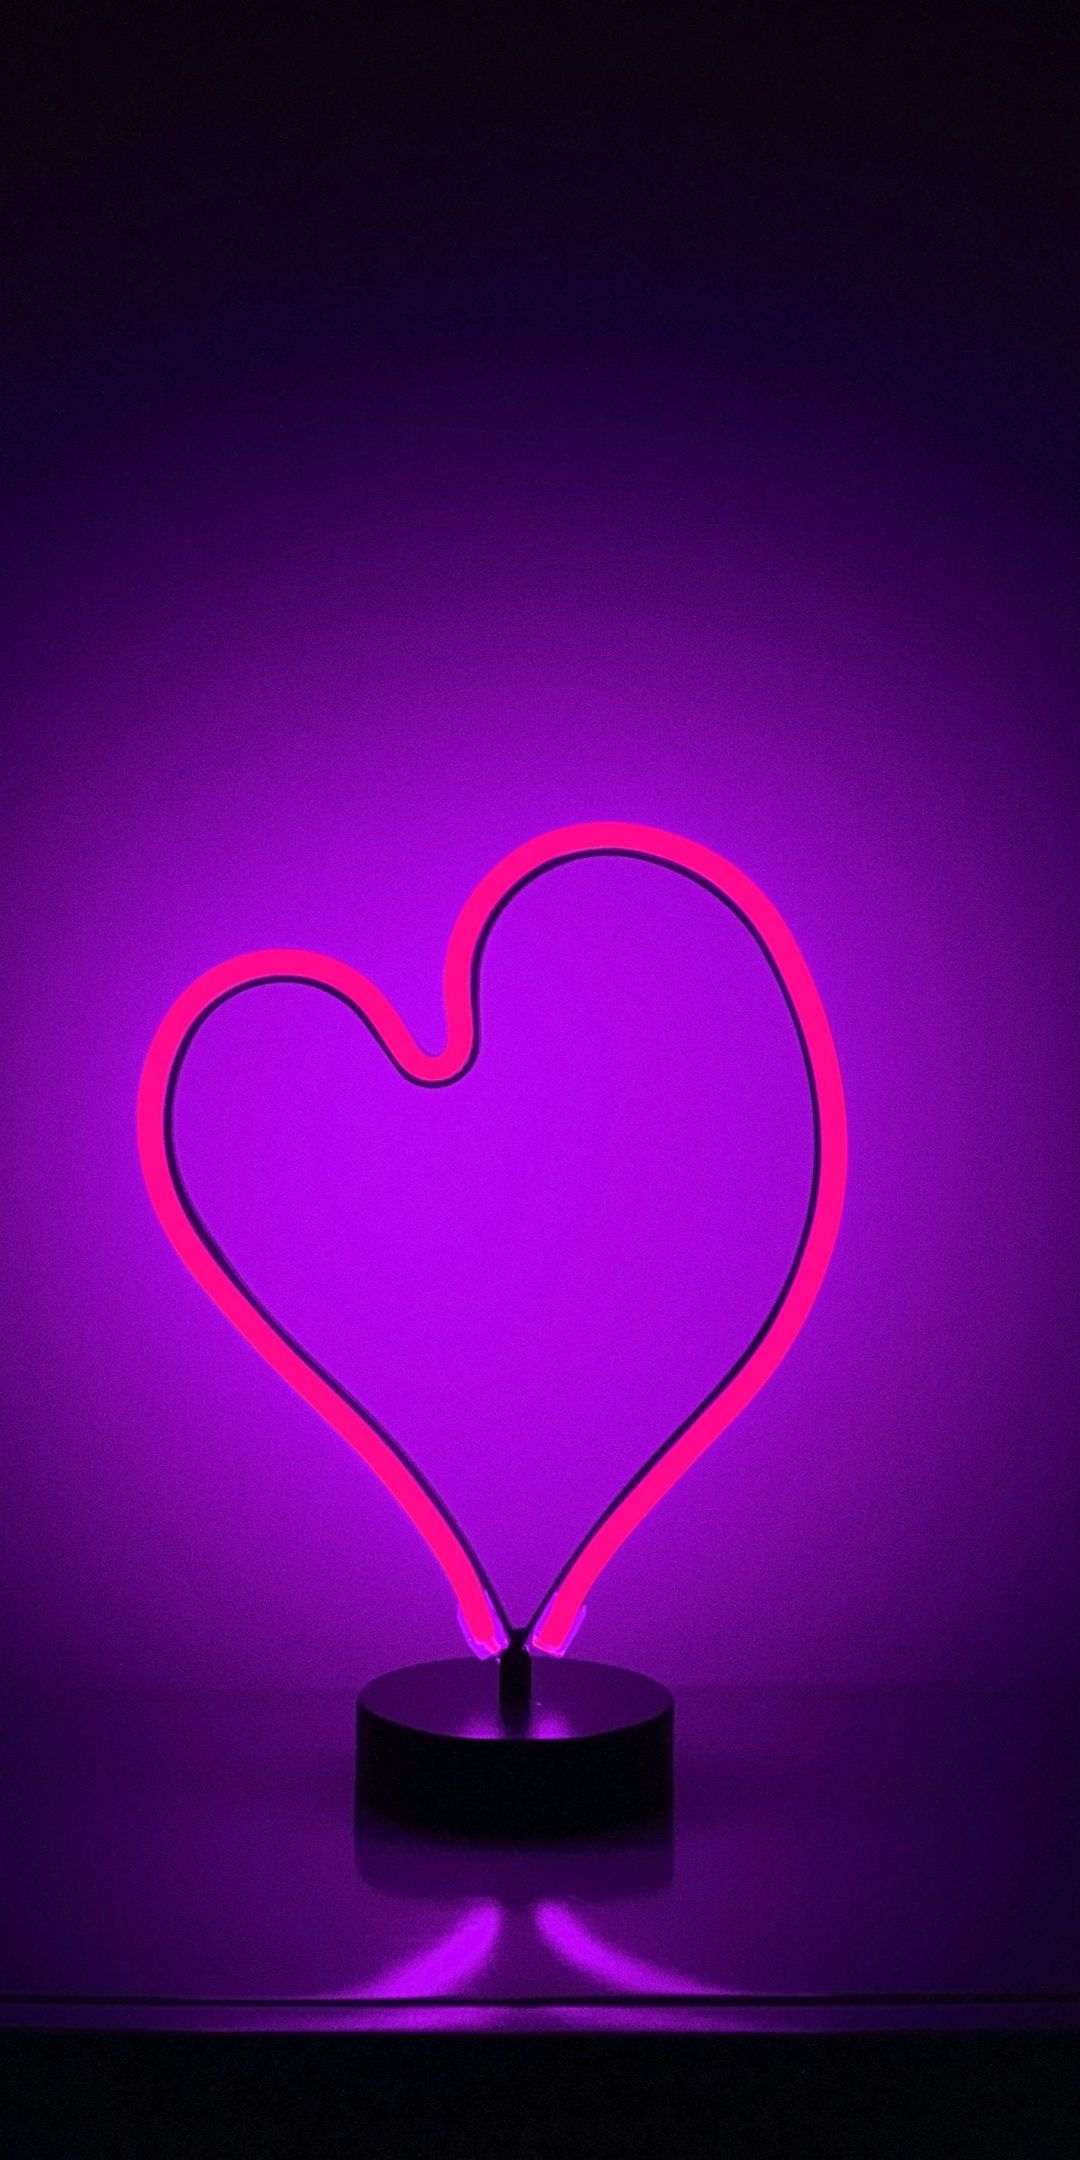 Download 1080x2160 wallpaper love, heart, neon, purple light, minimal, honor 7x, honor 9 lite, honor view HD image, background, 4519